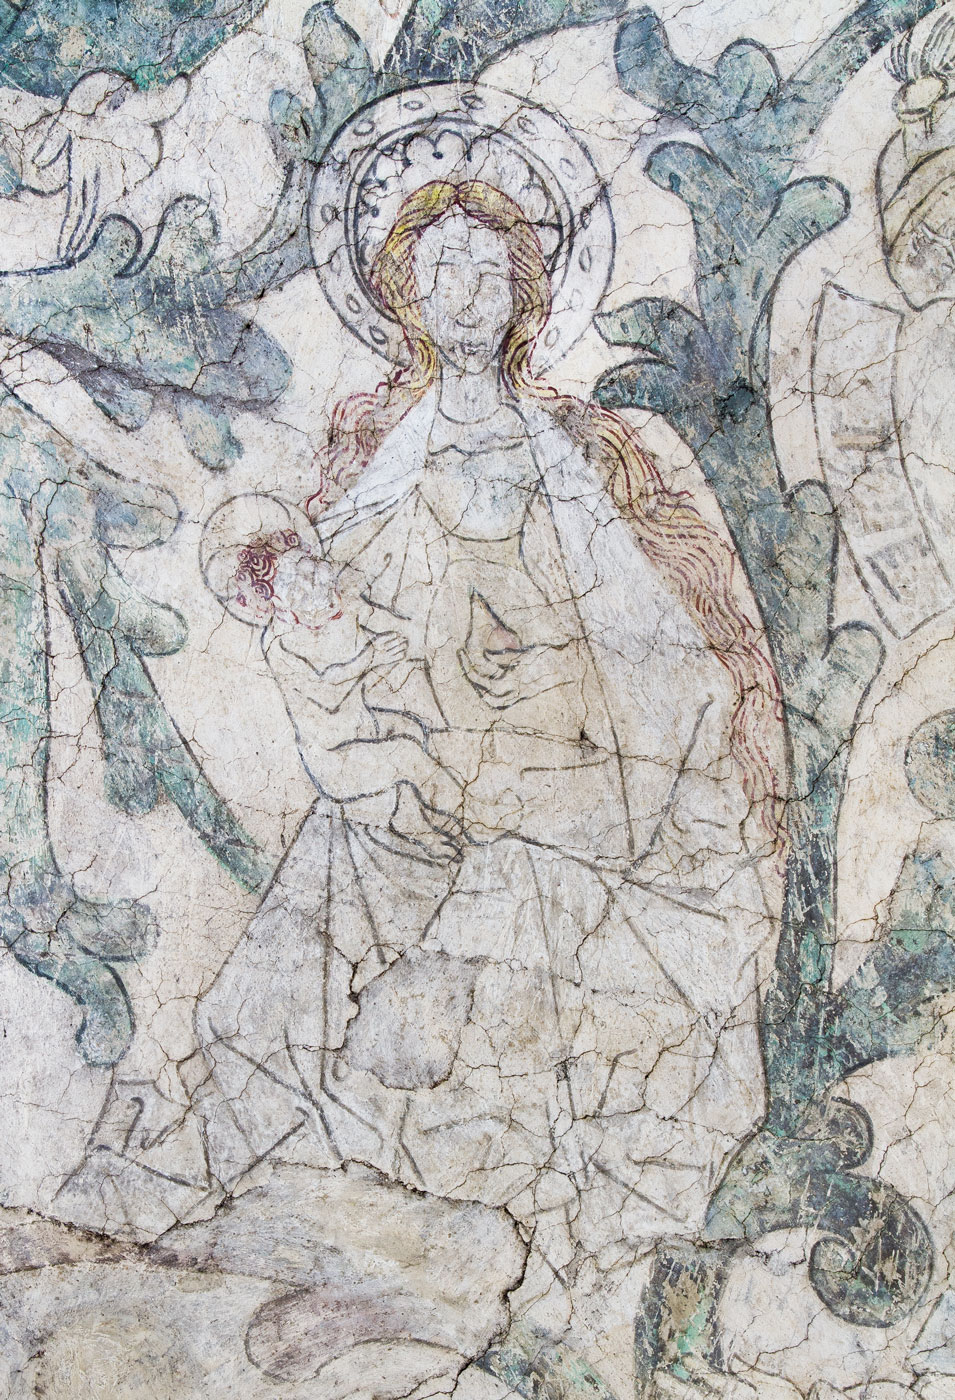 Maria med Jesusbarnet. Detalj ur Jesse rot - Torshälla kyrka